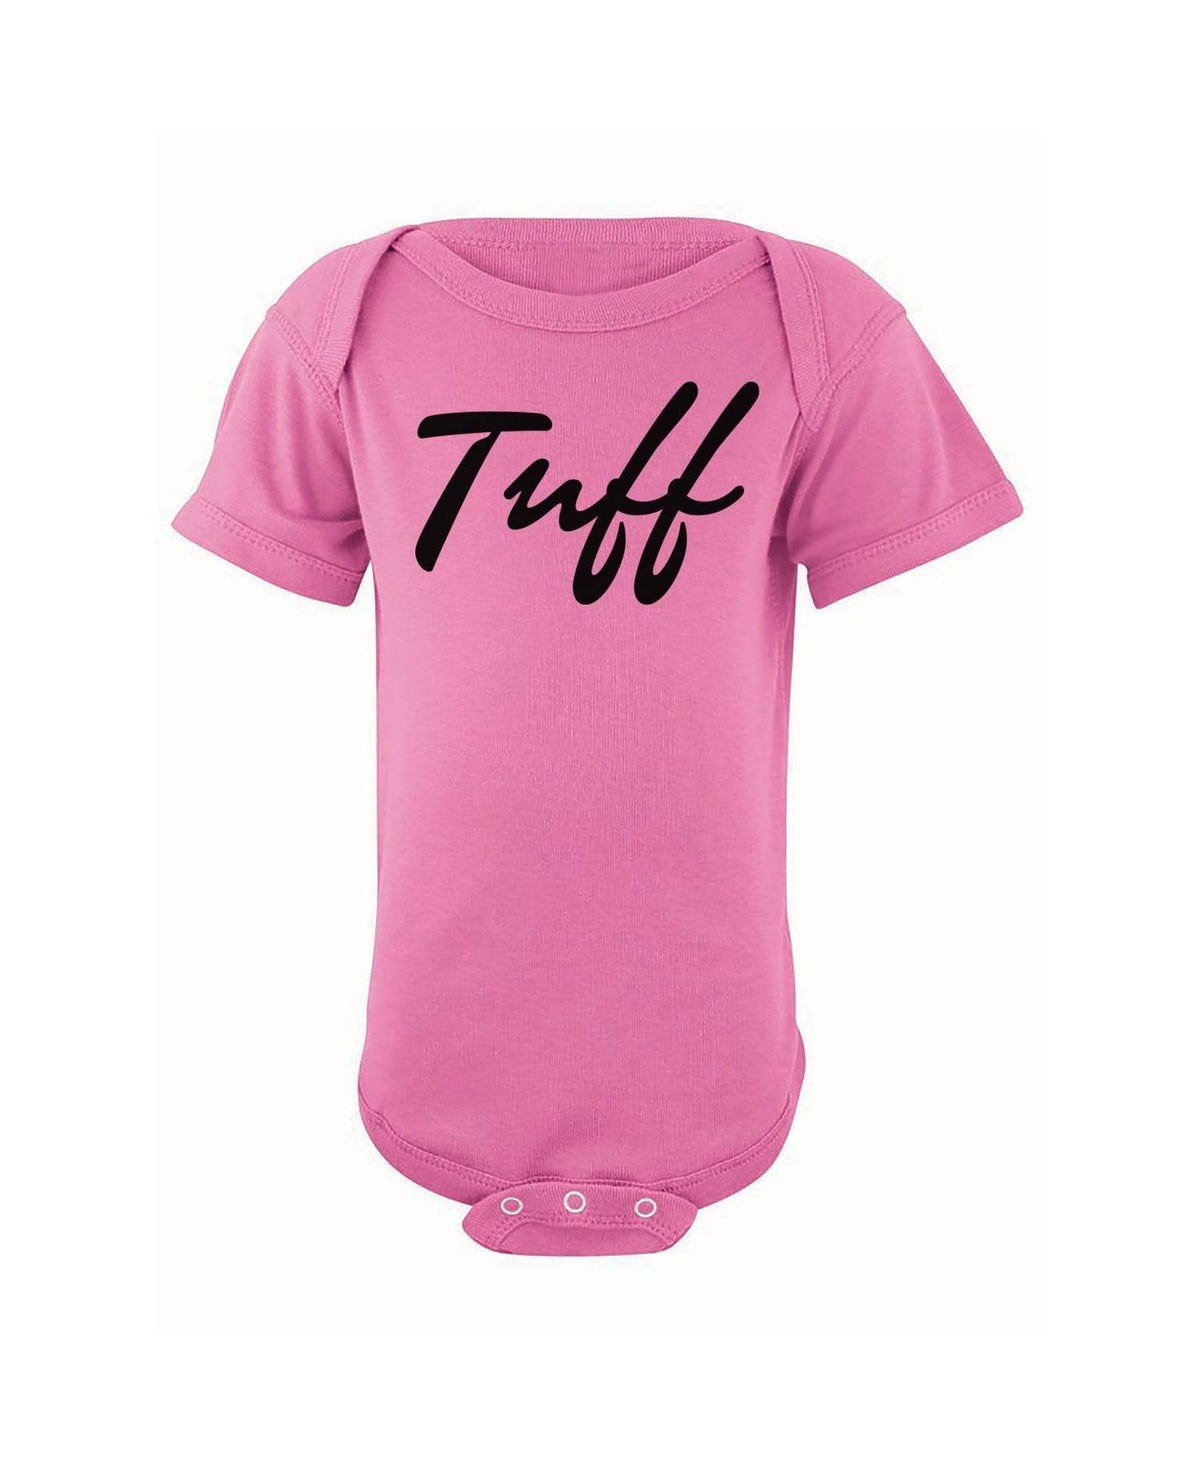 TUFF Thin Script Infant Onesie NB / Pink TuffWraps.com